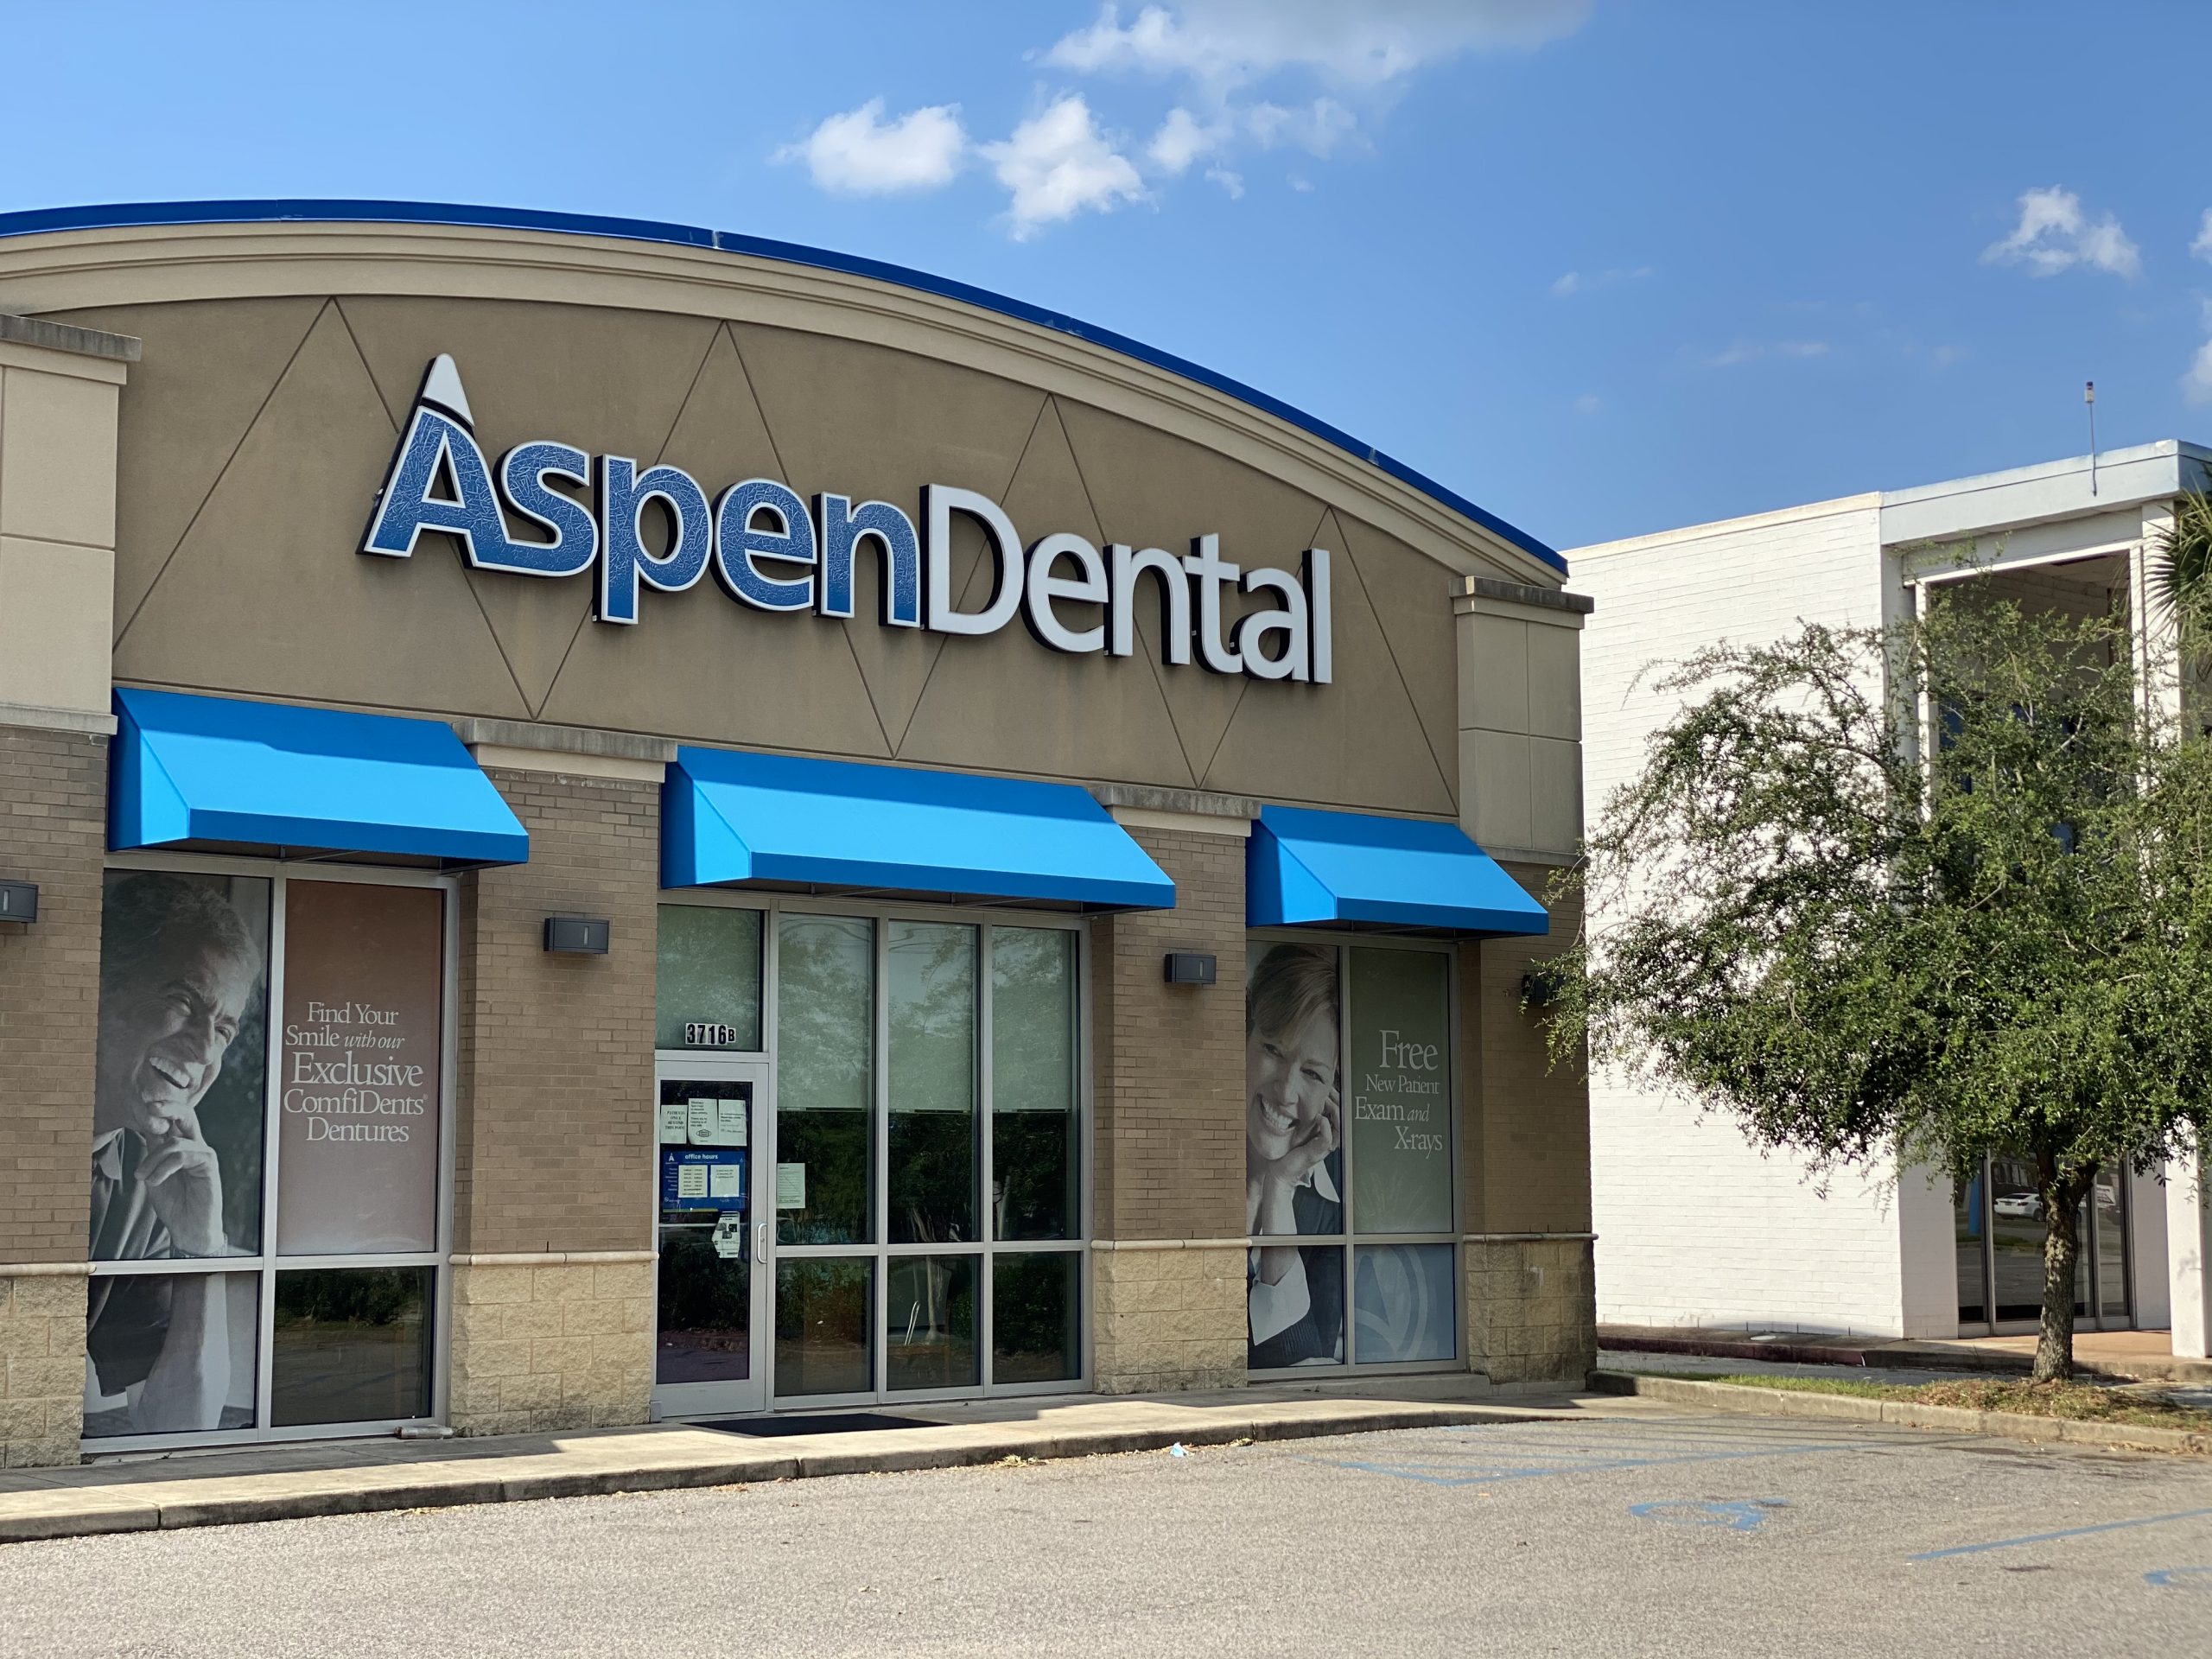 Home Portfolio Aspen Dental & Eyemart Express